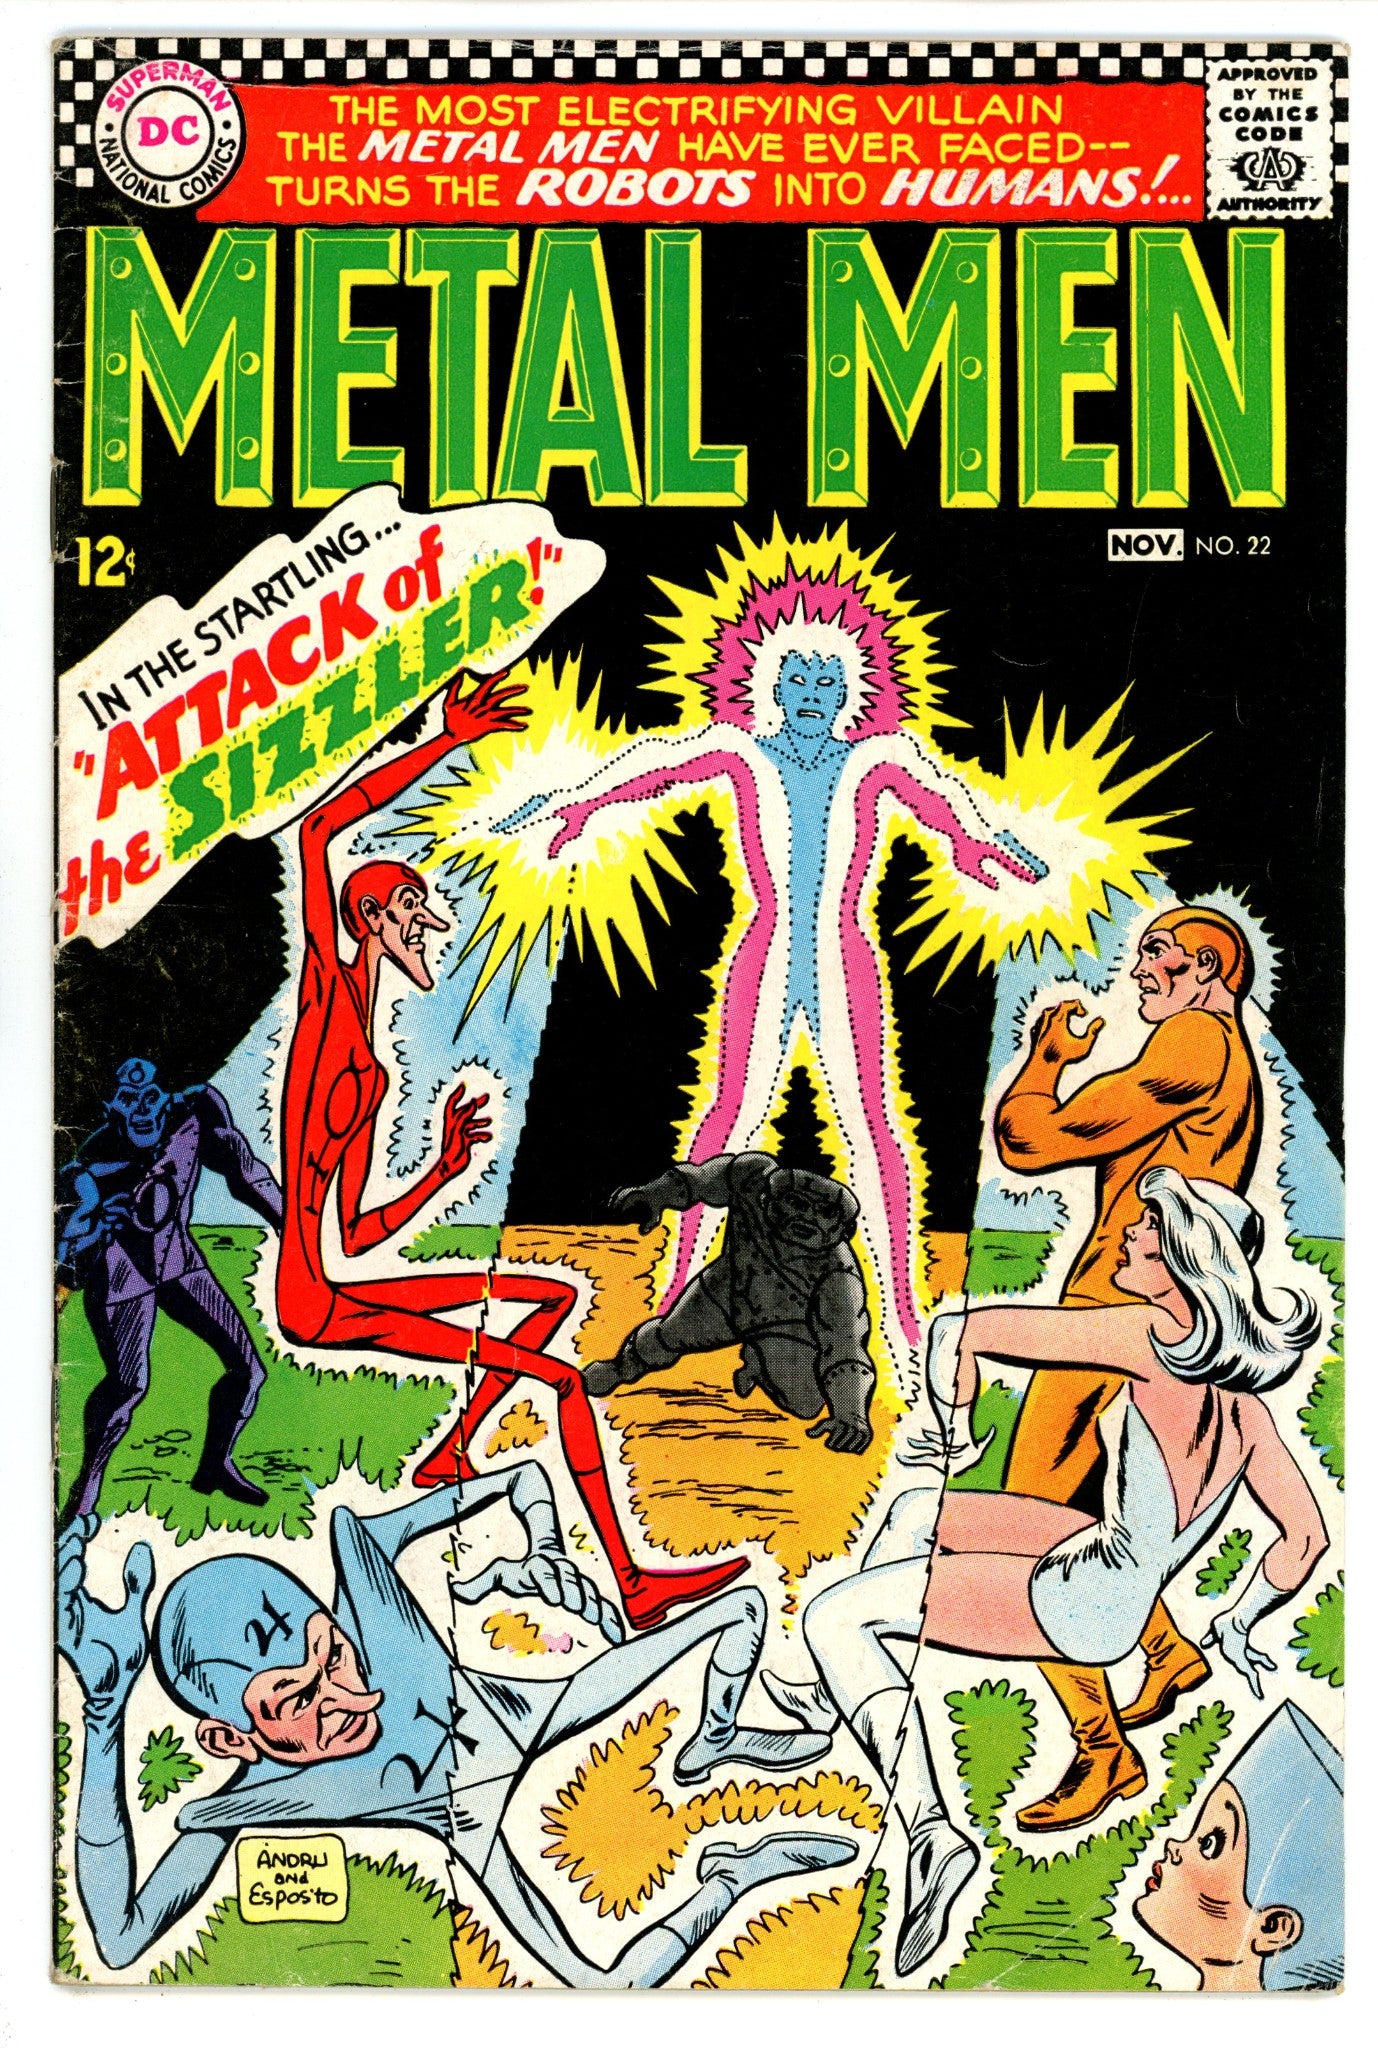 Metal Men Vol 1 22 VG+ (4.5) (1966) 